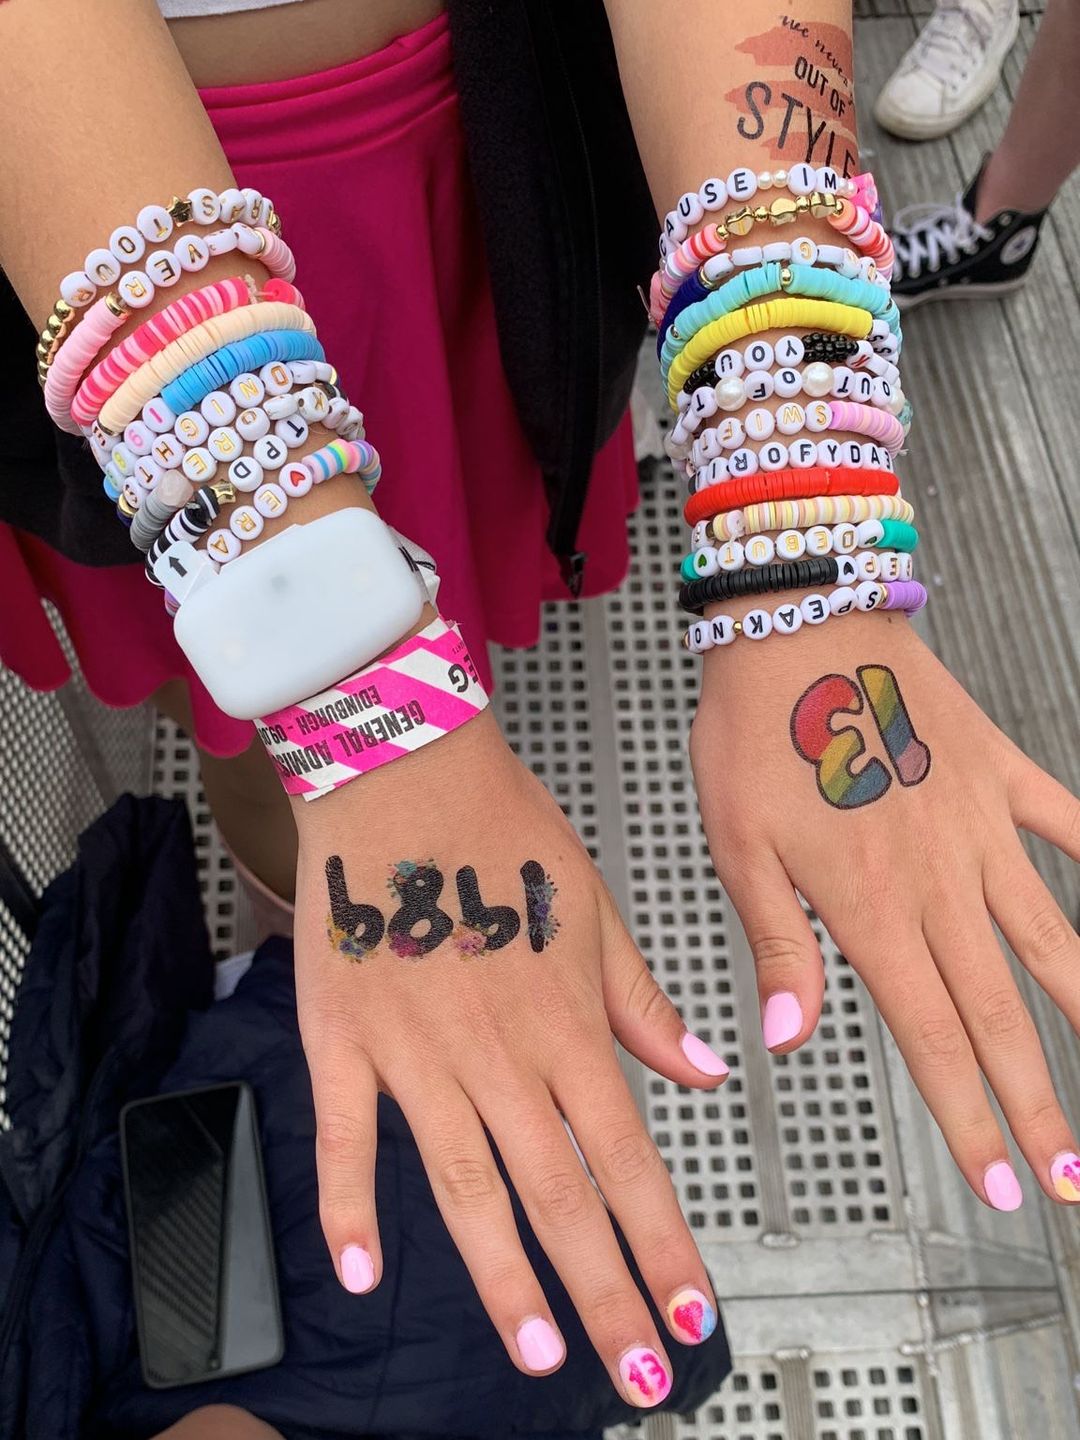 Friendship bracelets and tattoos at Eras Tour